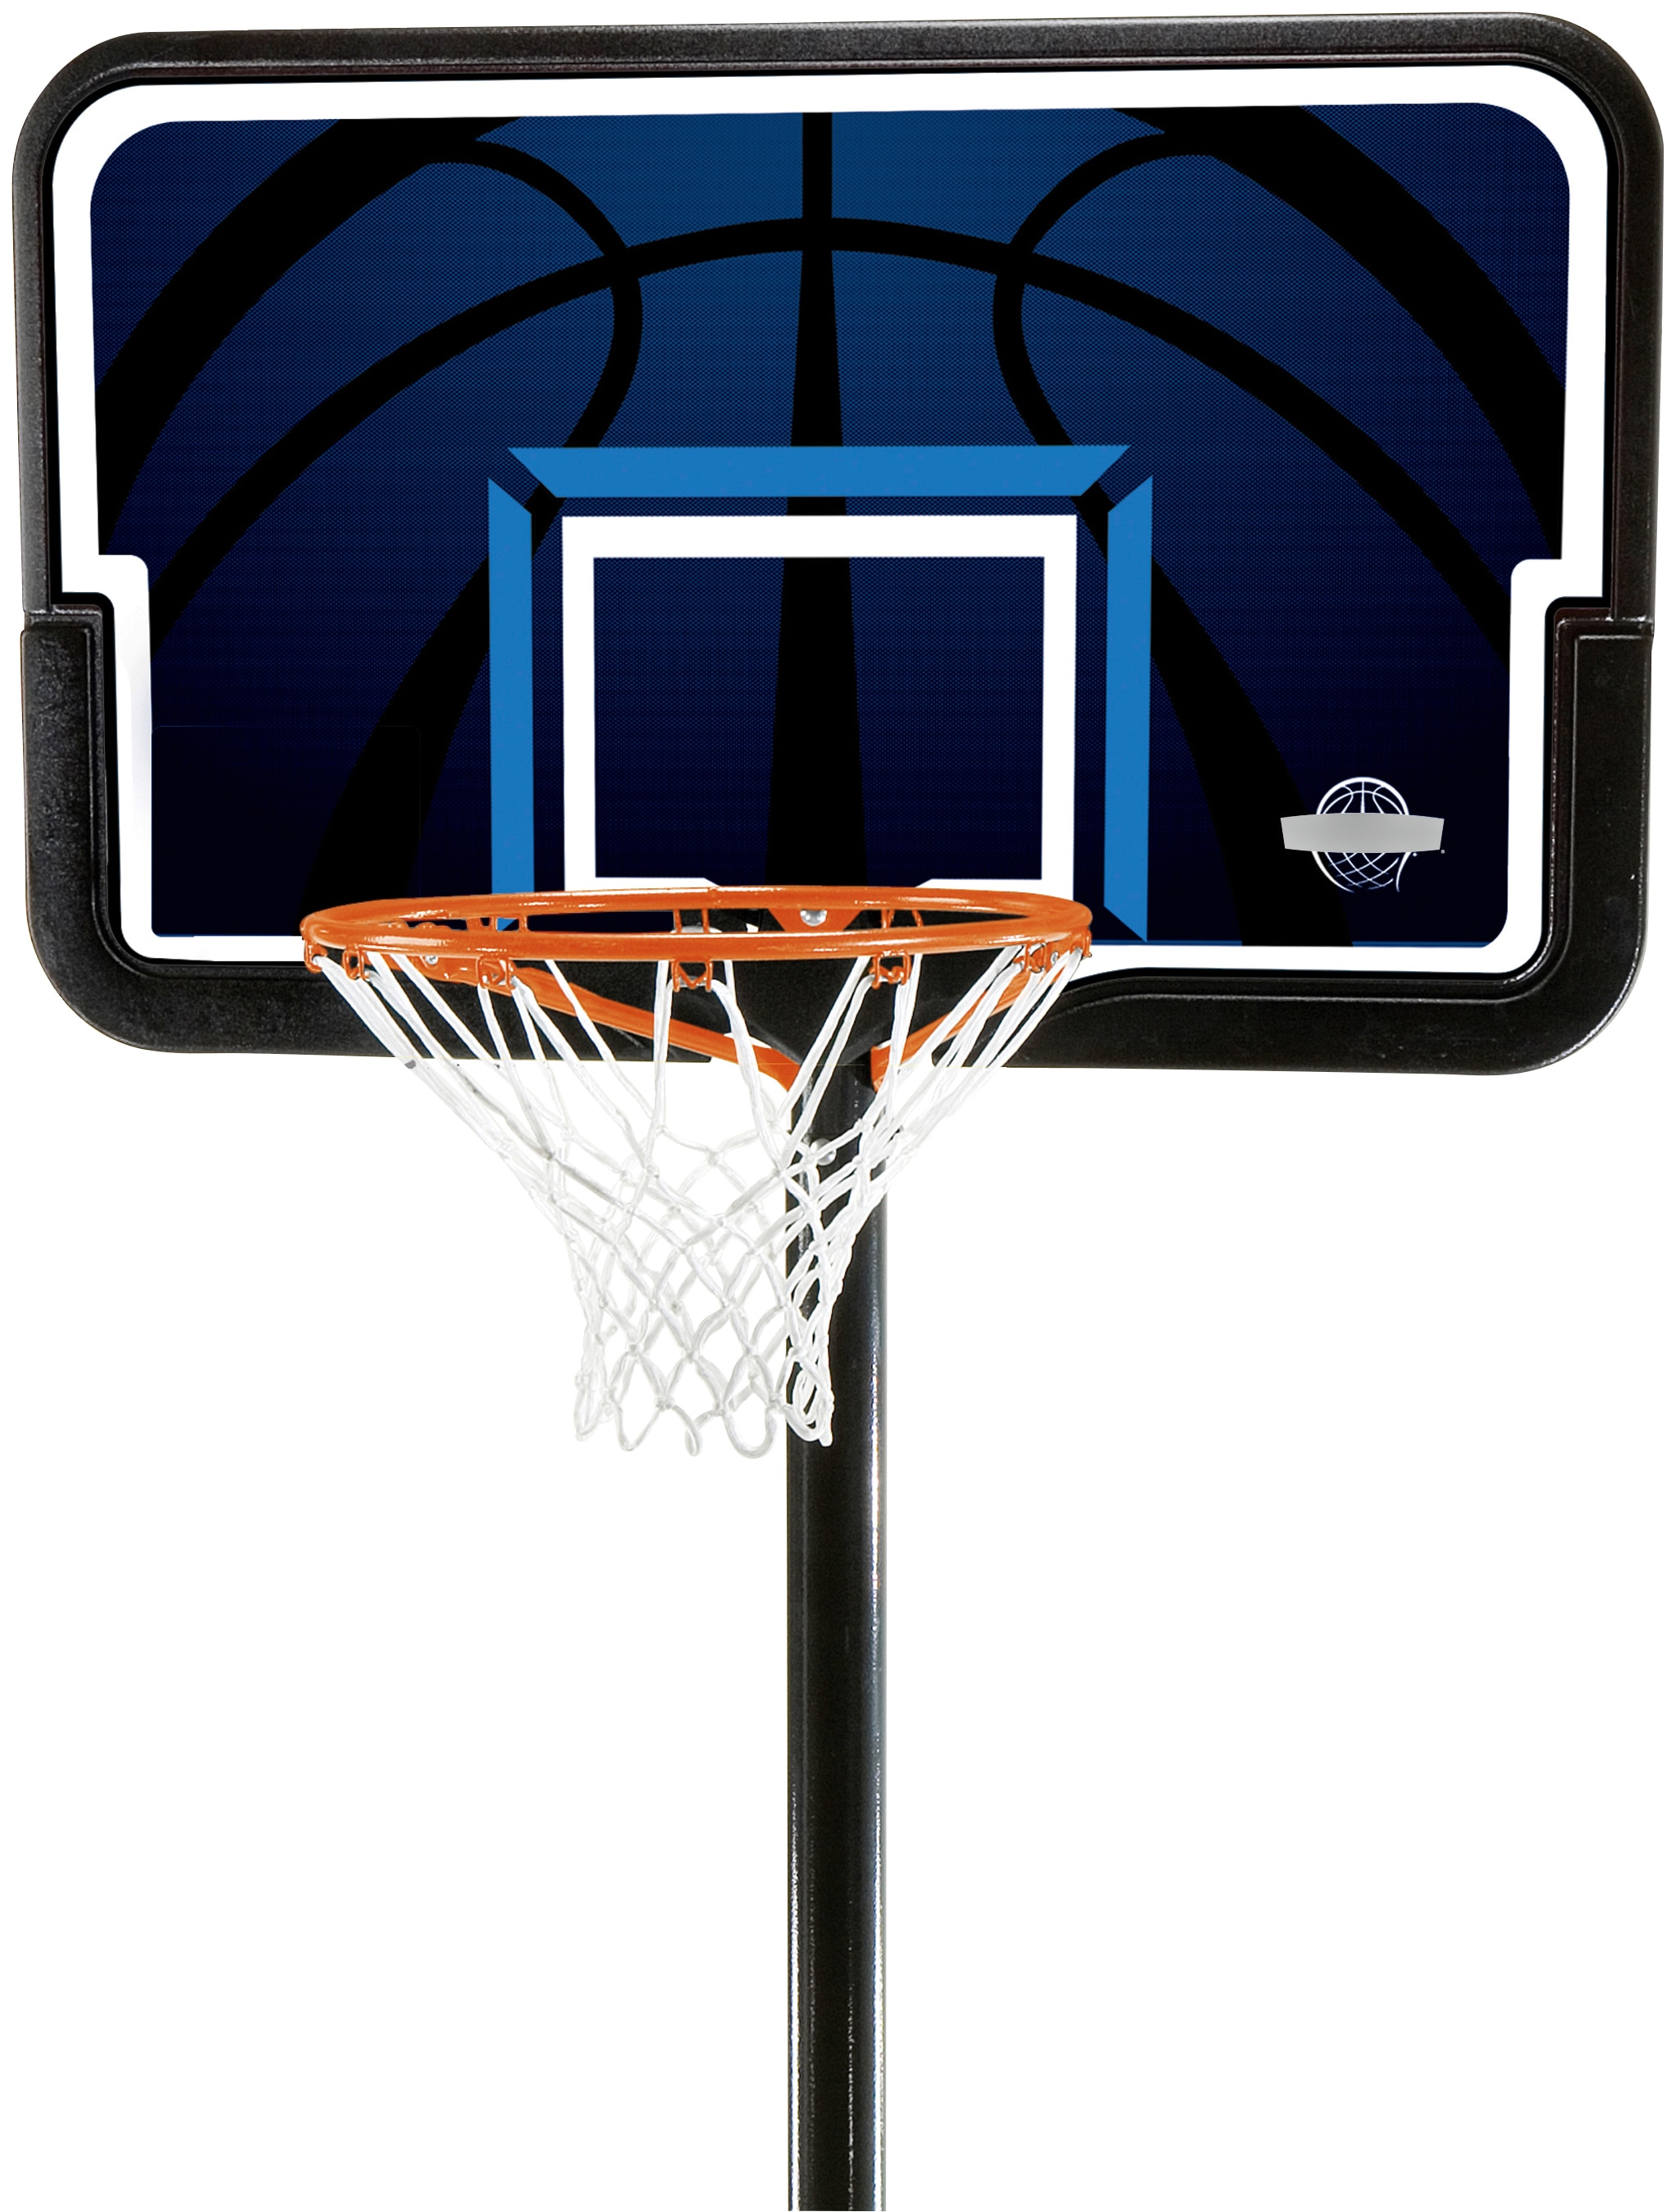 50NRTH Basketballkorb »Nevada«, höhenverstellbar schwarz/blau BAUR 